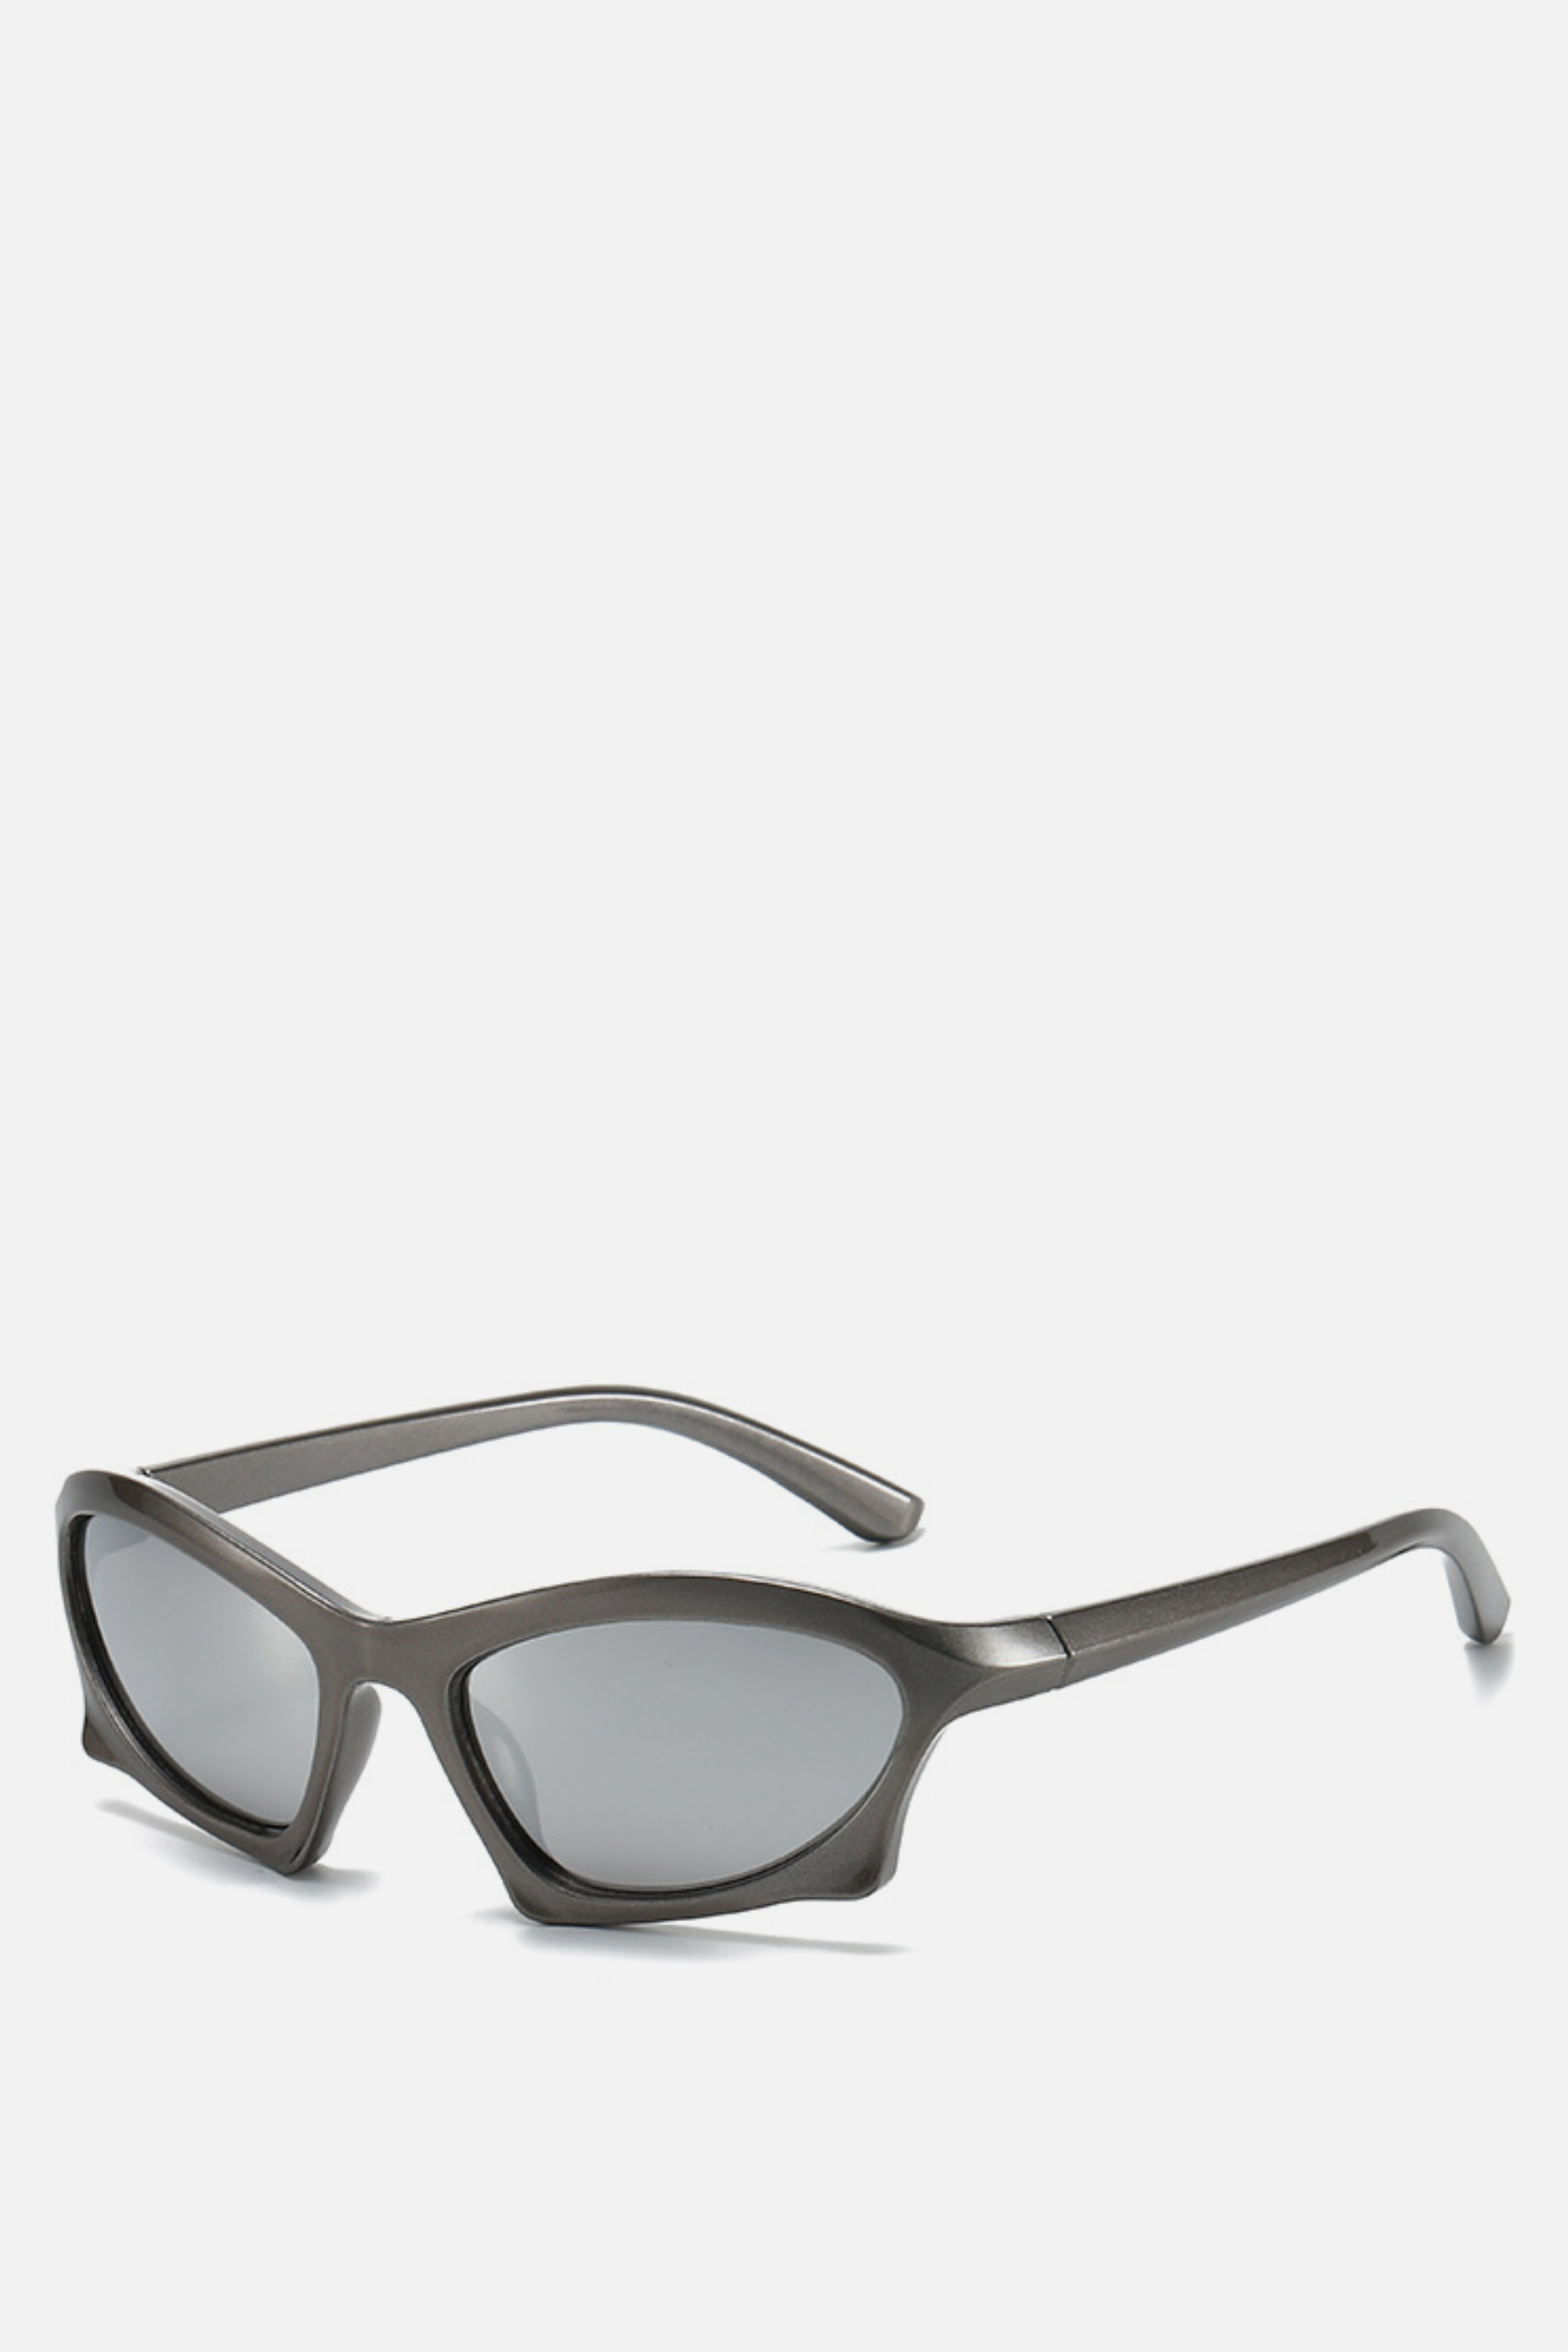 CALI Grey Cat Eye Sunglasses